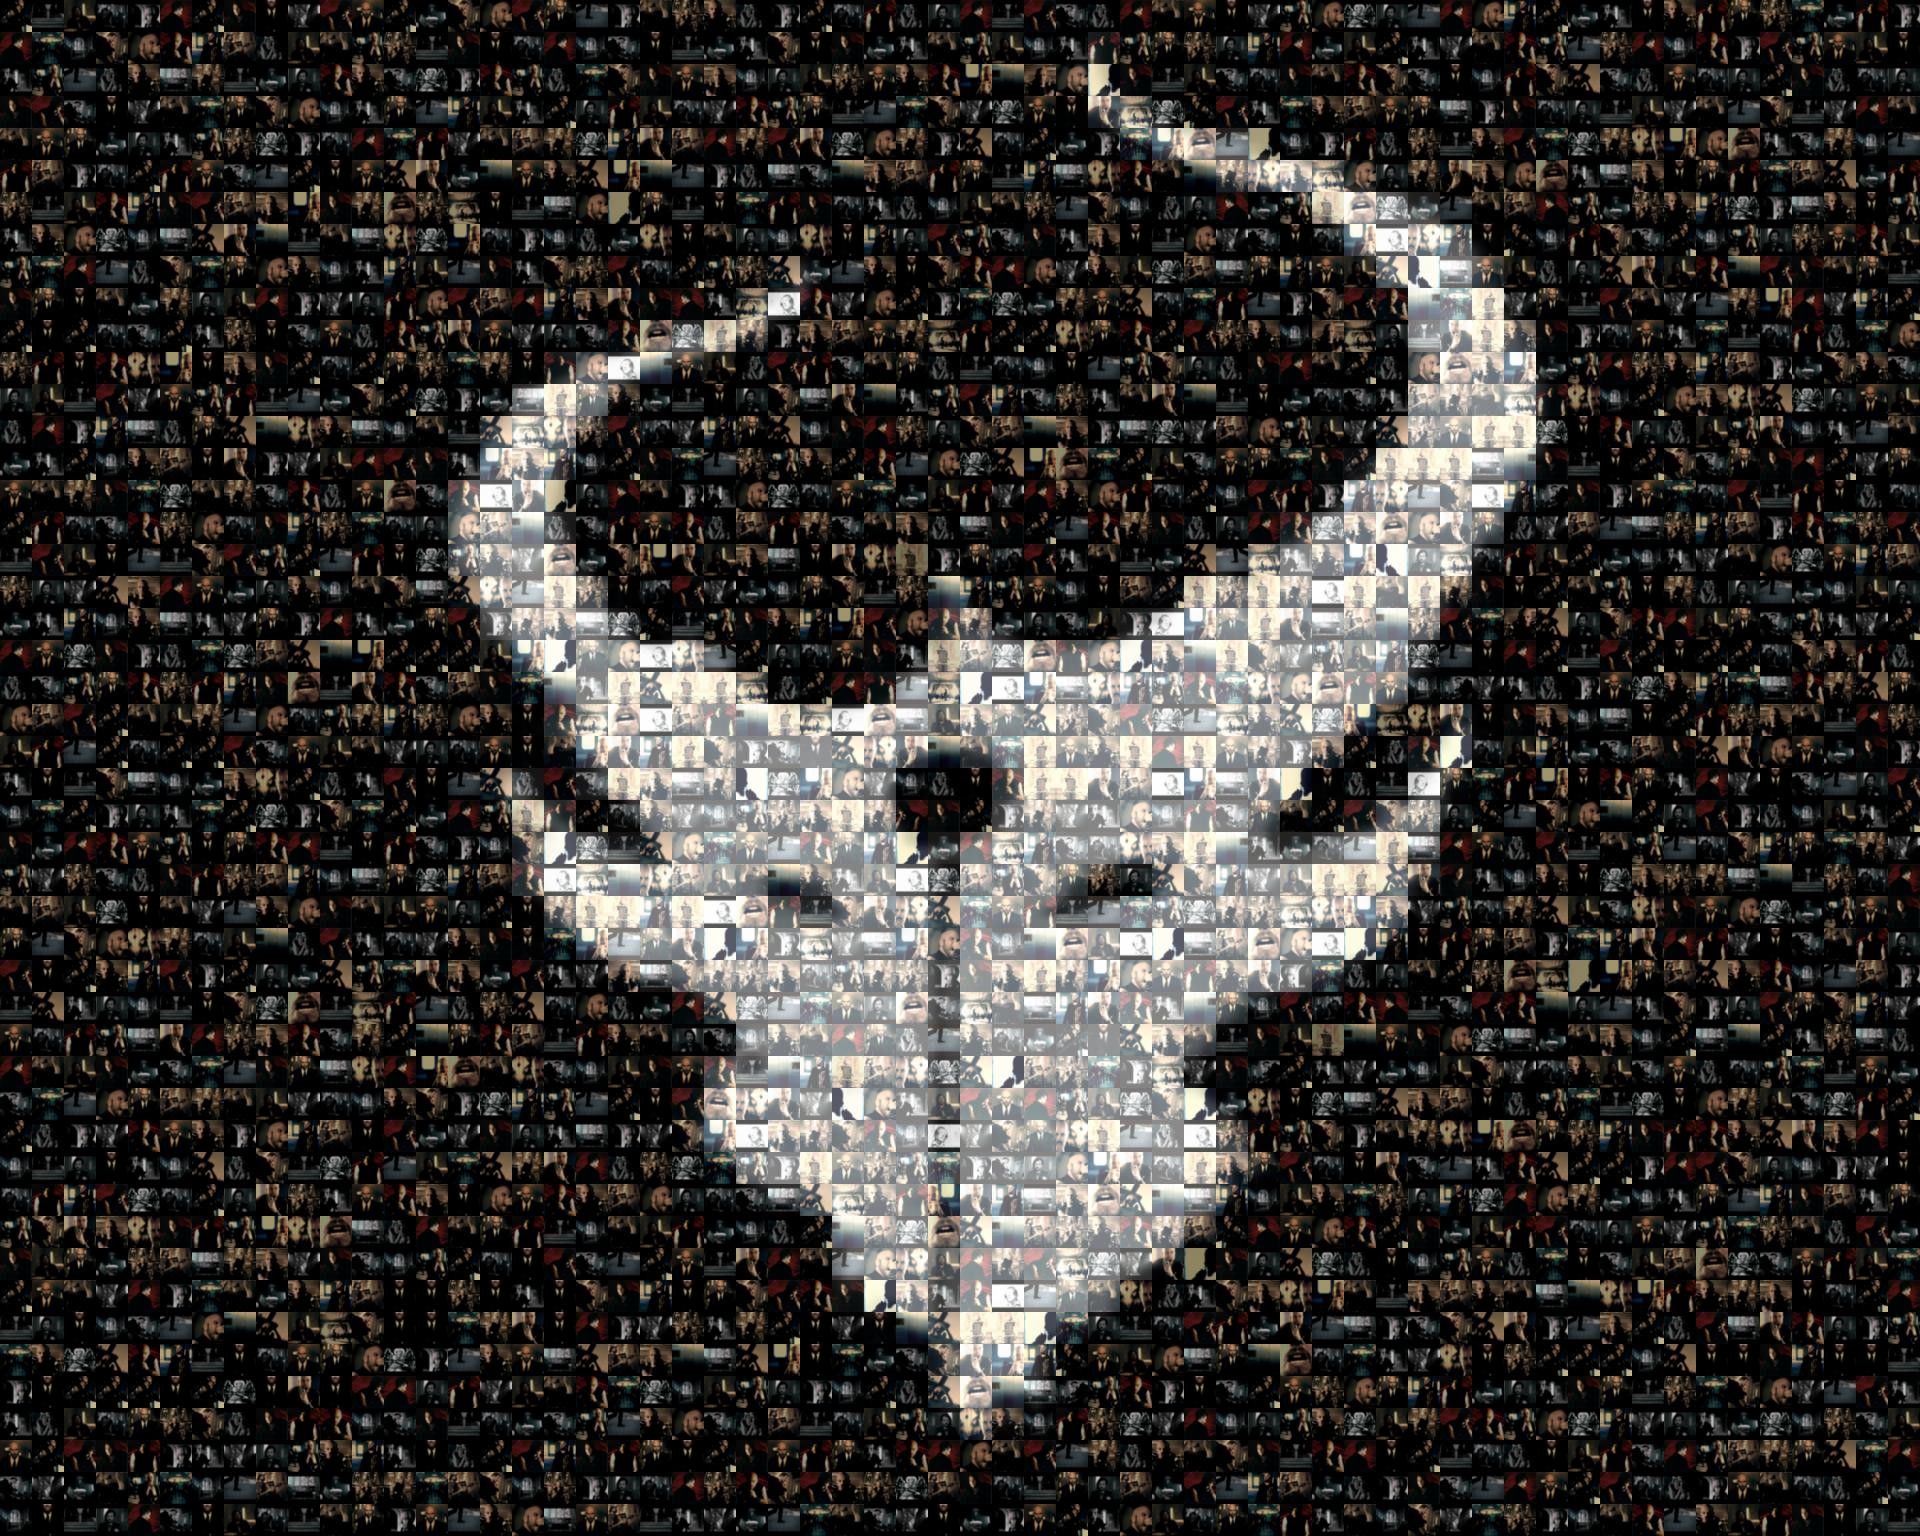 1920x1536 Demon Hunter Band Wallpaper Hd Demon hunter mosaic by 